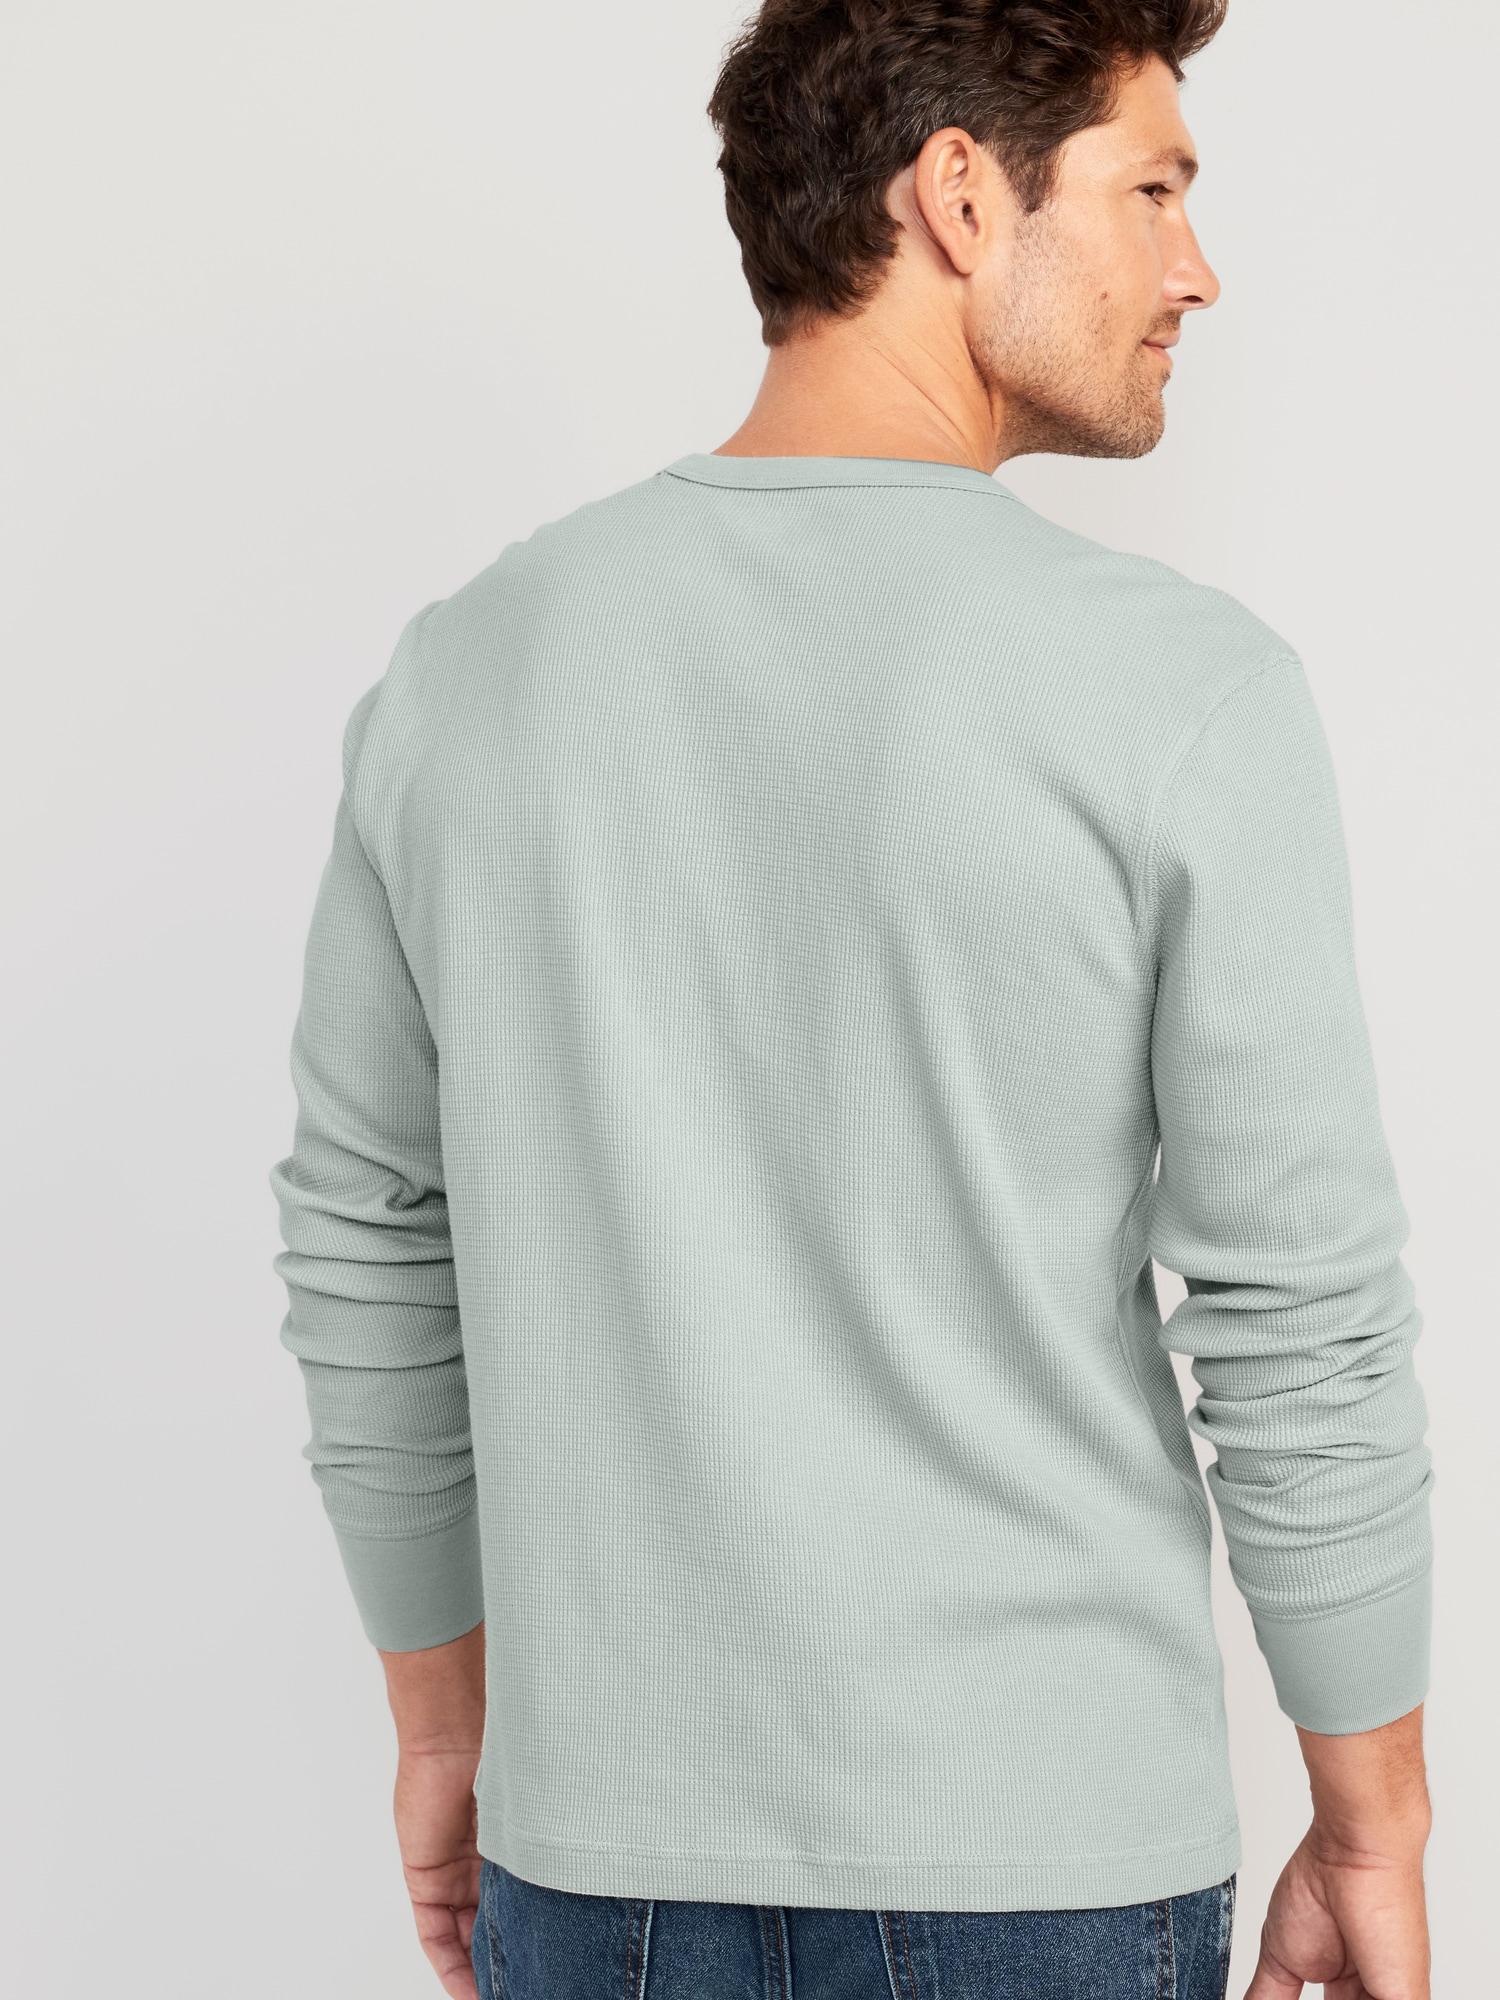 Long-Sleeve Built-In Flex Waffle-Knit T-Shirt for Men